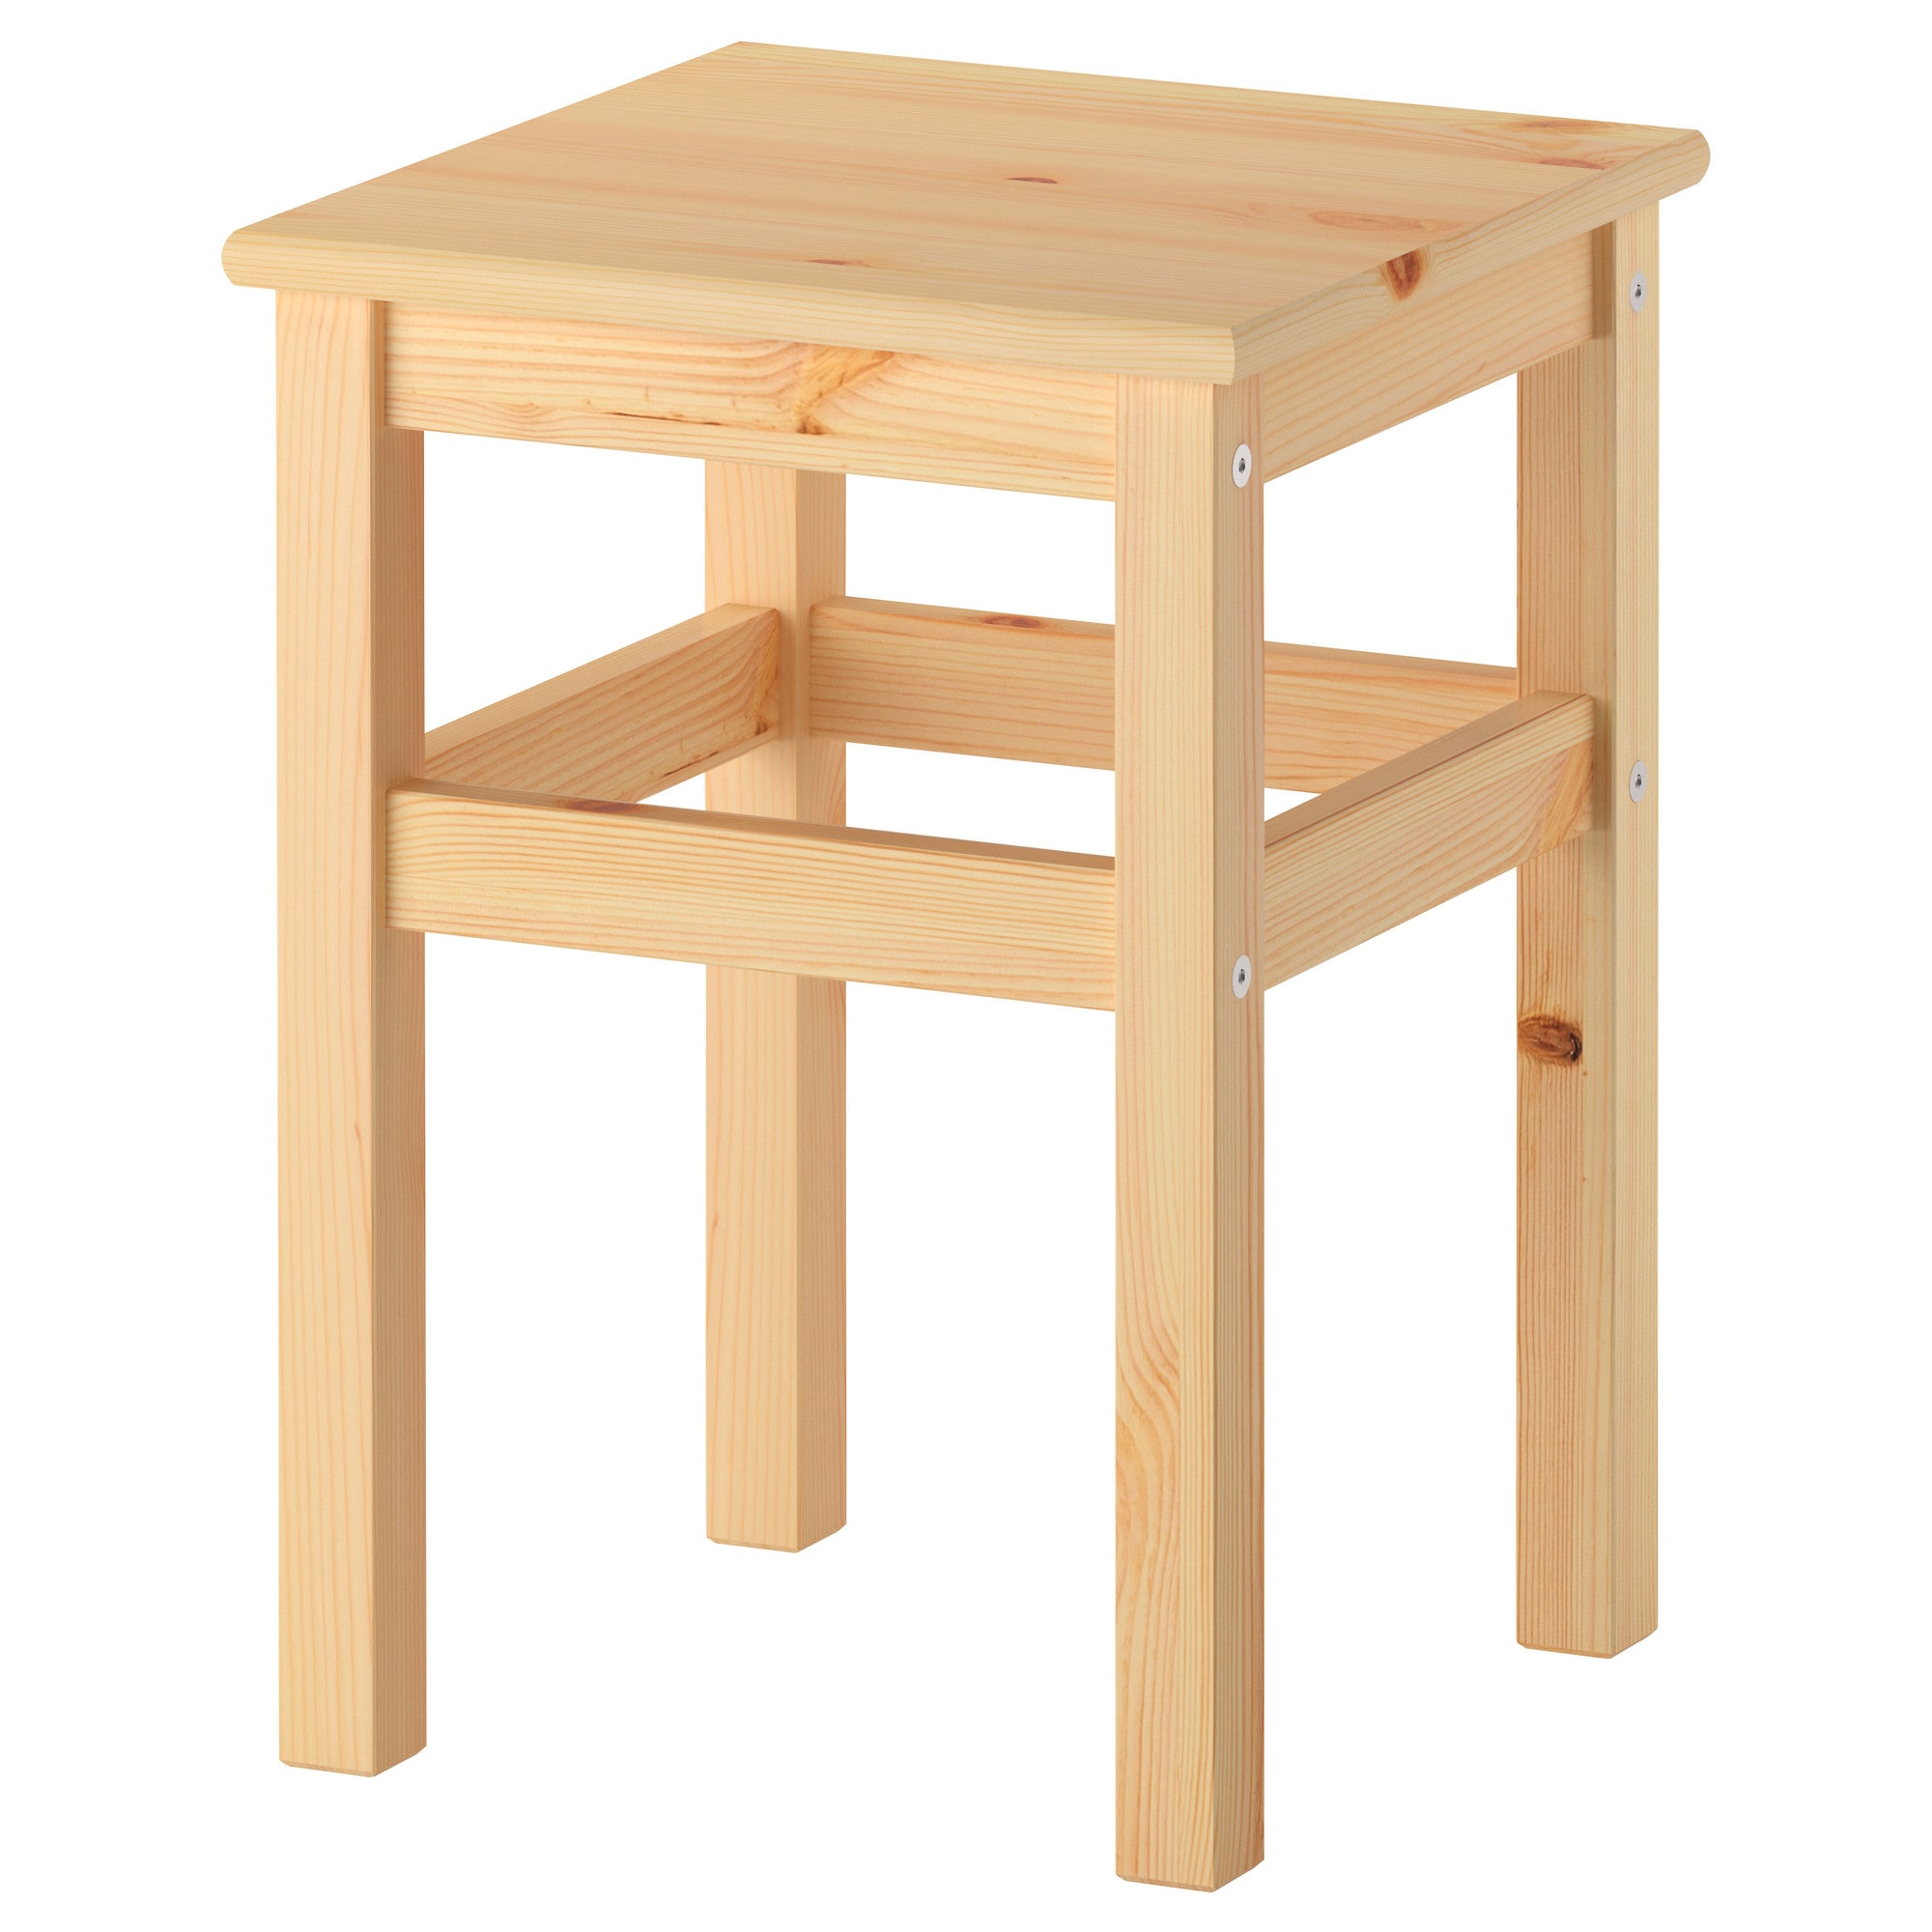 IKEA ODDVAR stool